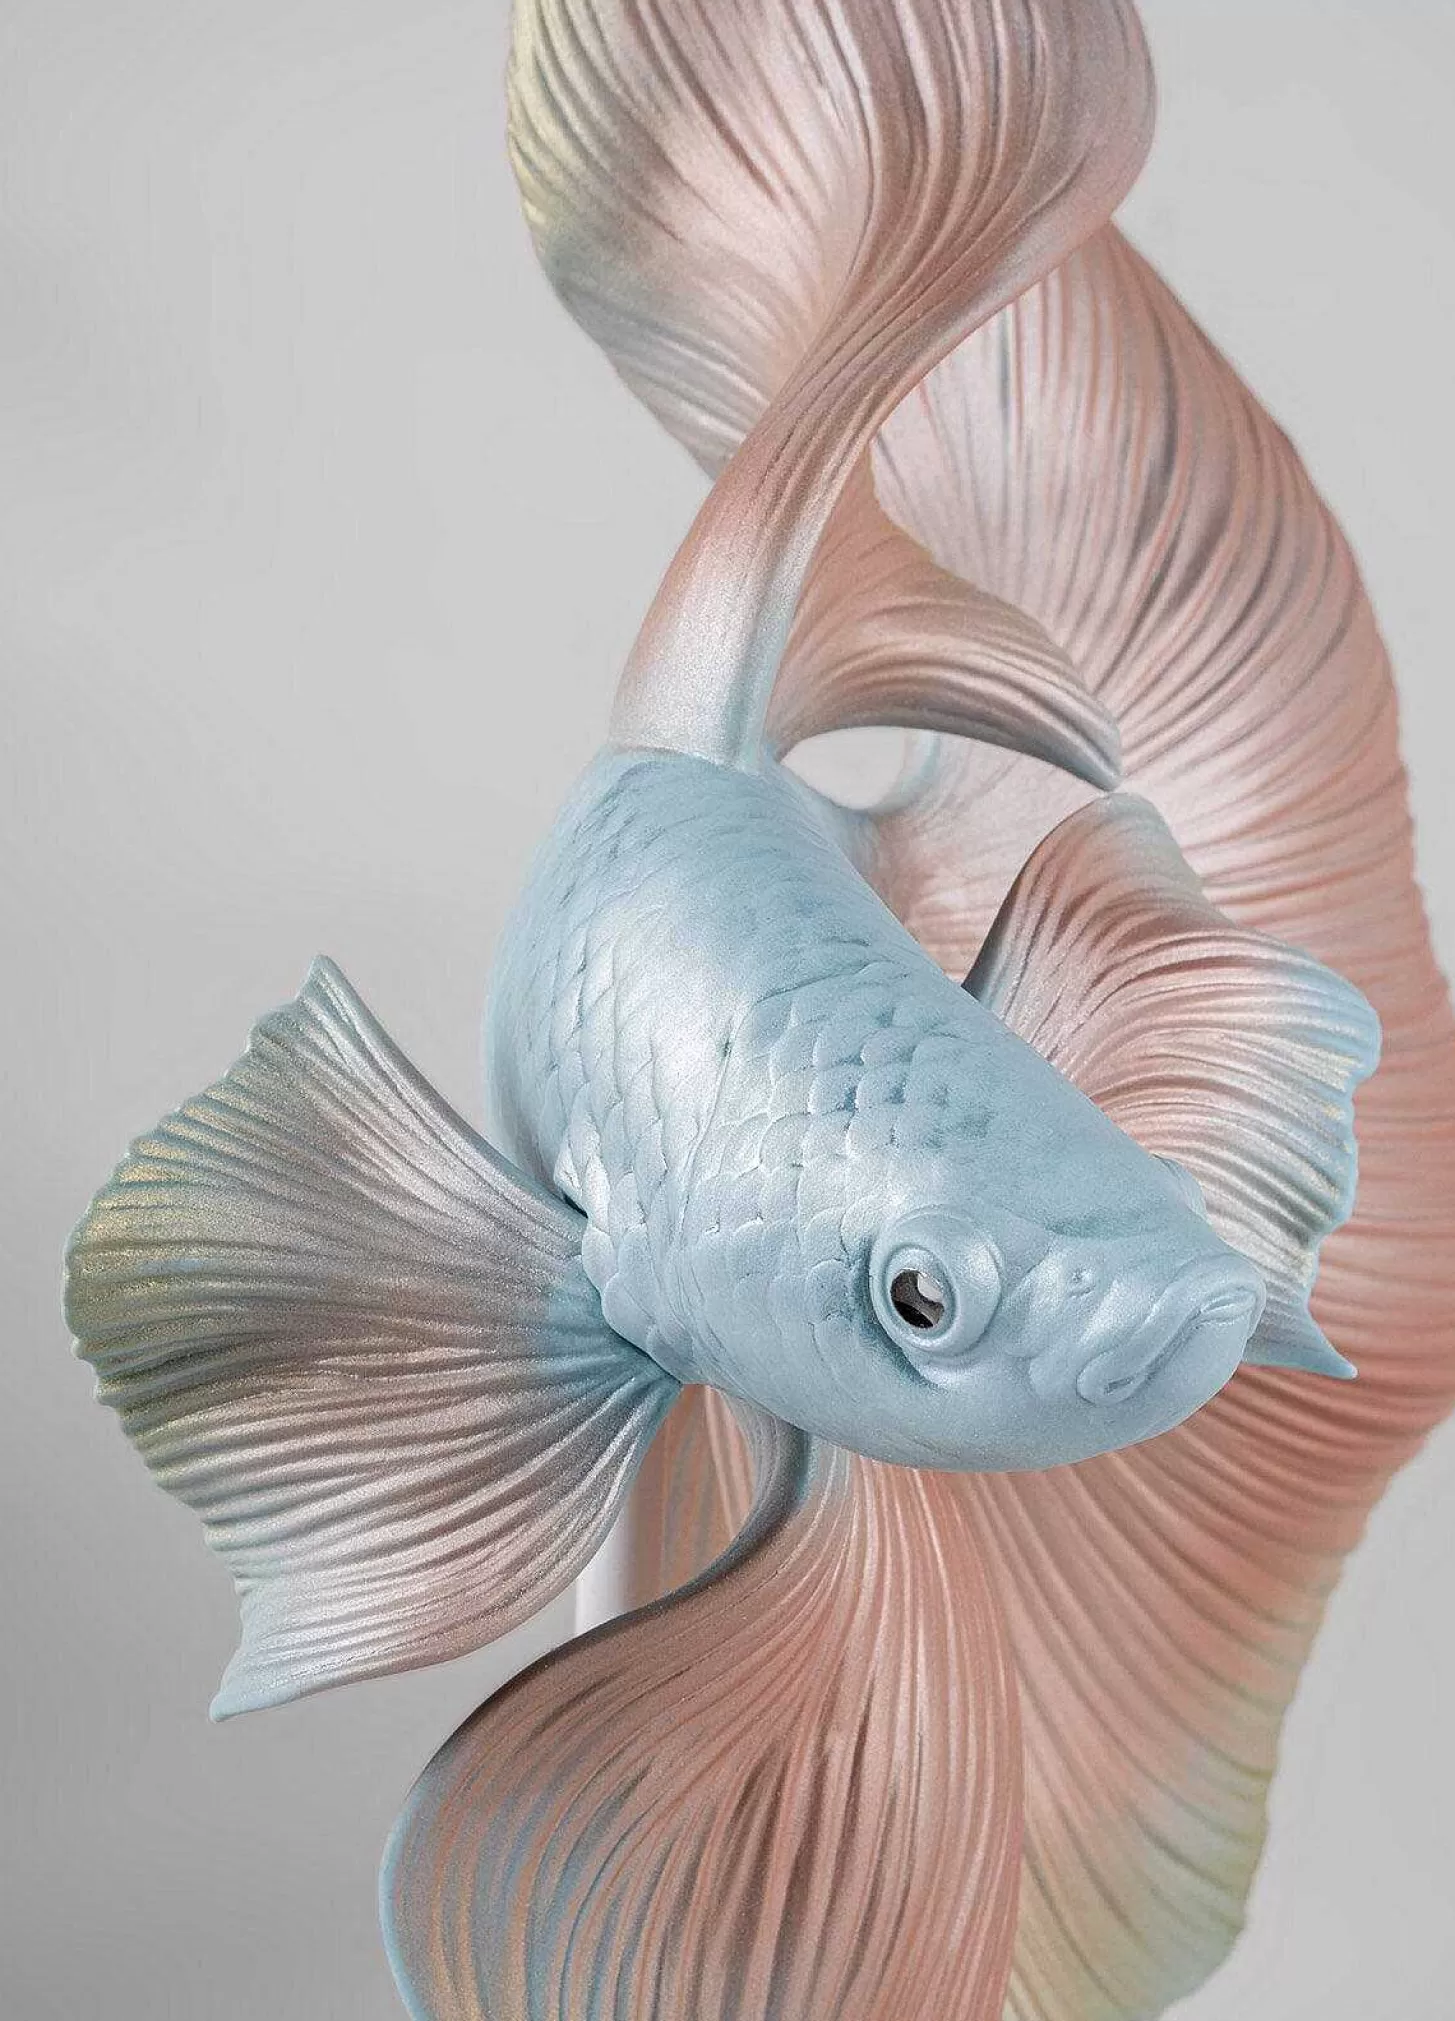 Lladró Betta Fish Sculpture. Right^ Design